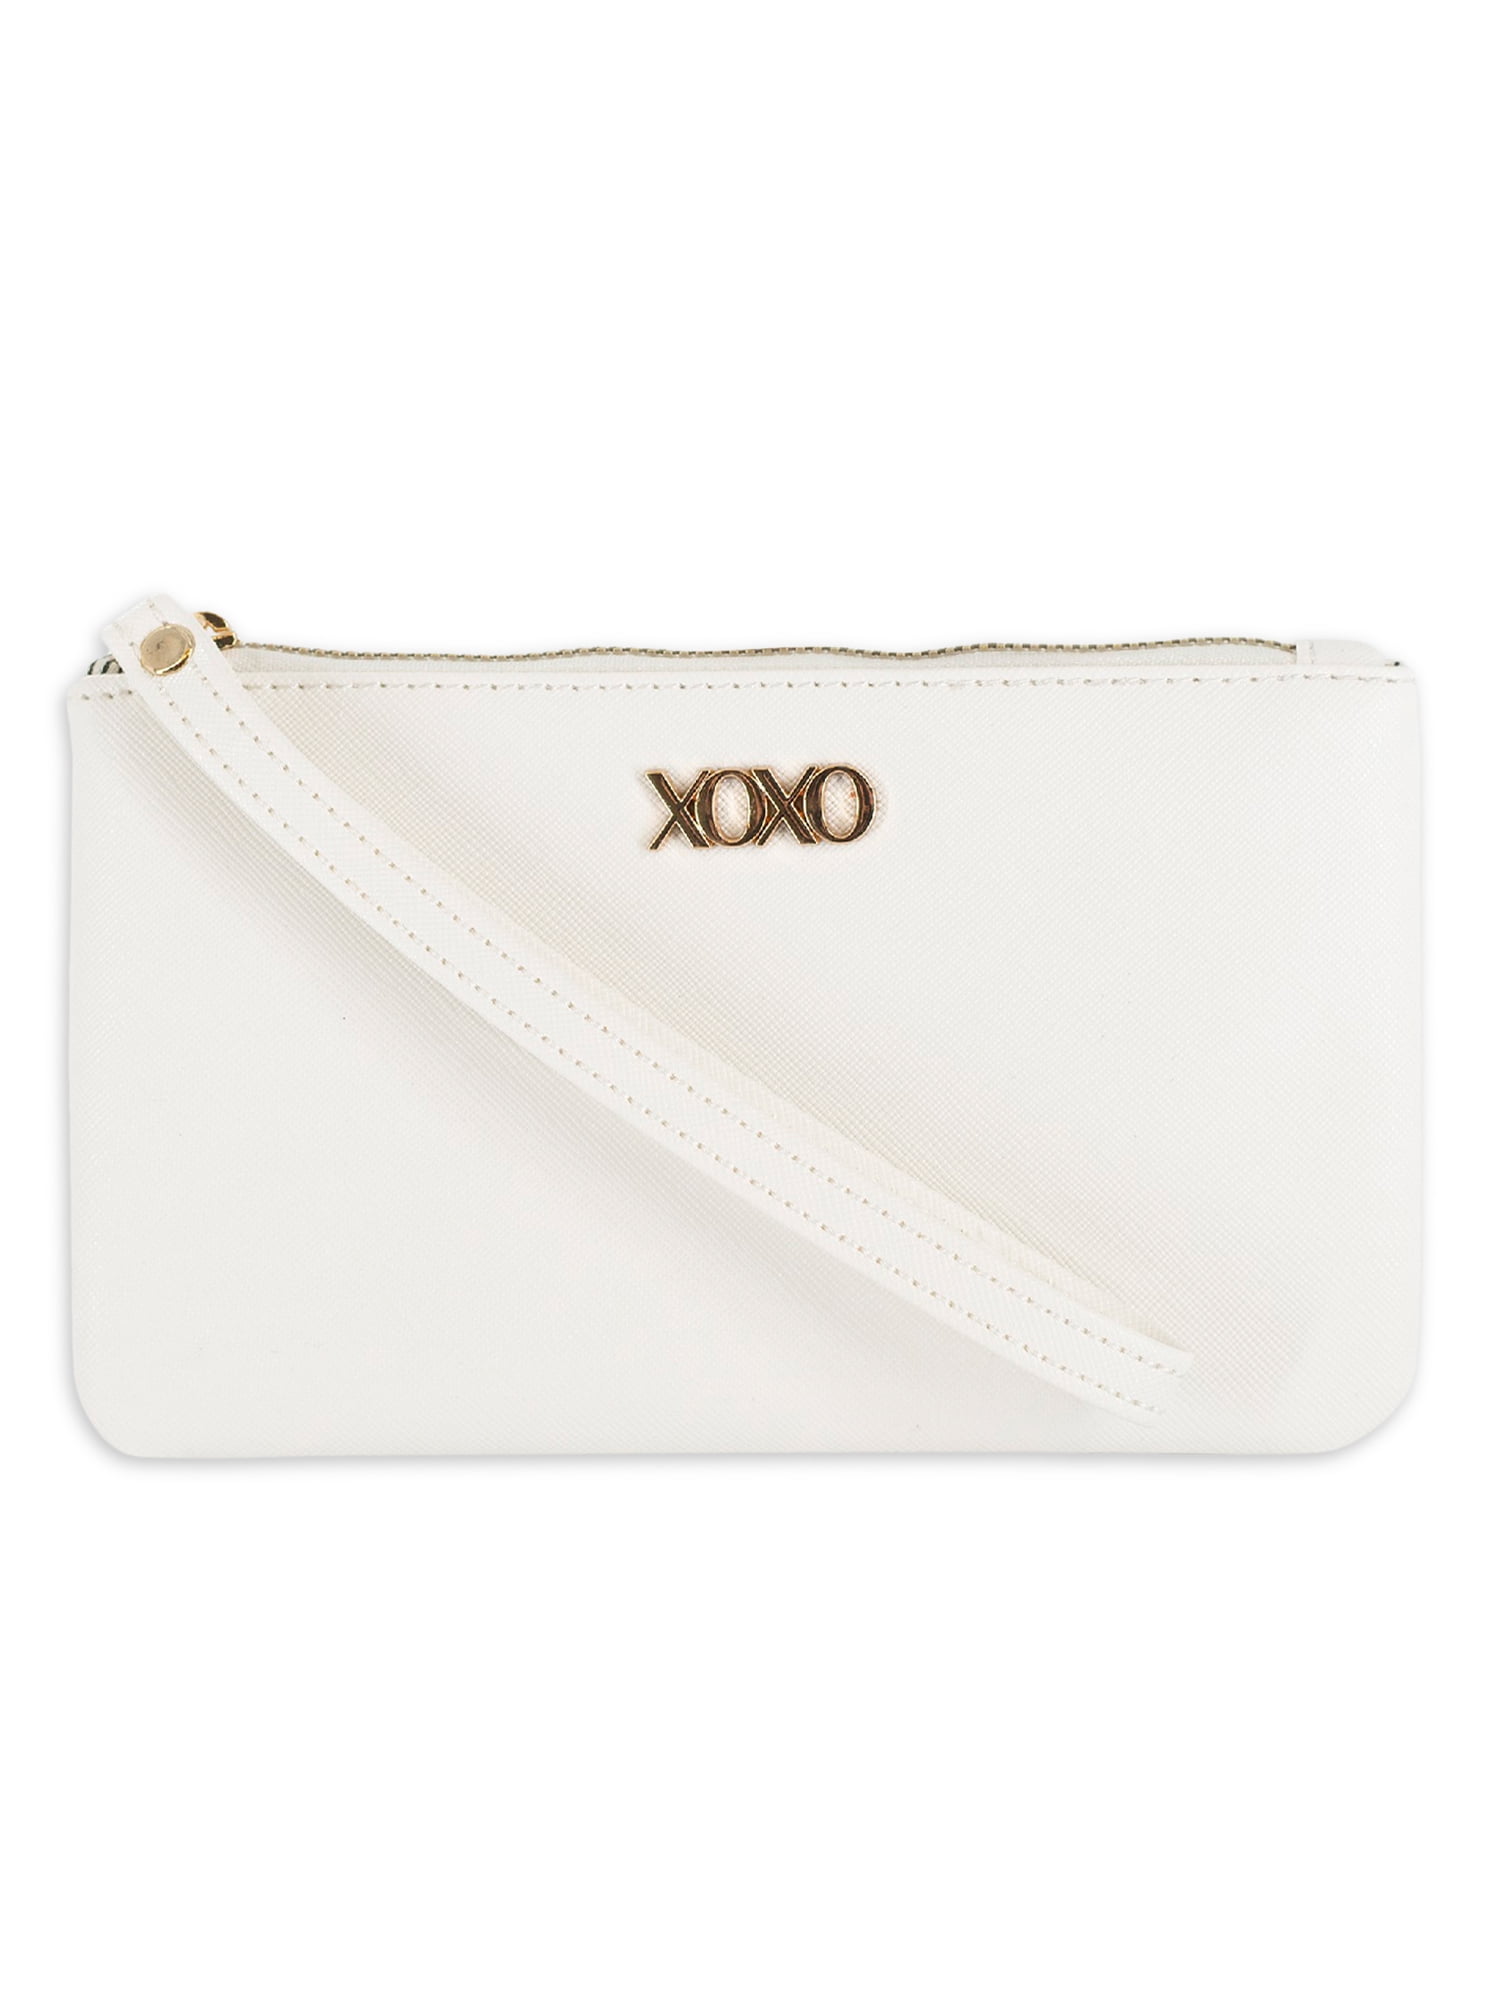 XOXO Women's Large Metallic White Saffiano Leather Solid/Patterned Wristlet  Wallet - Walmart.com